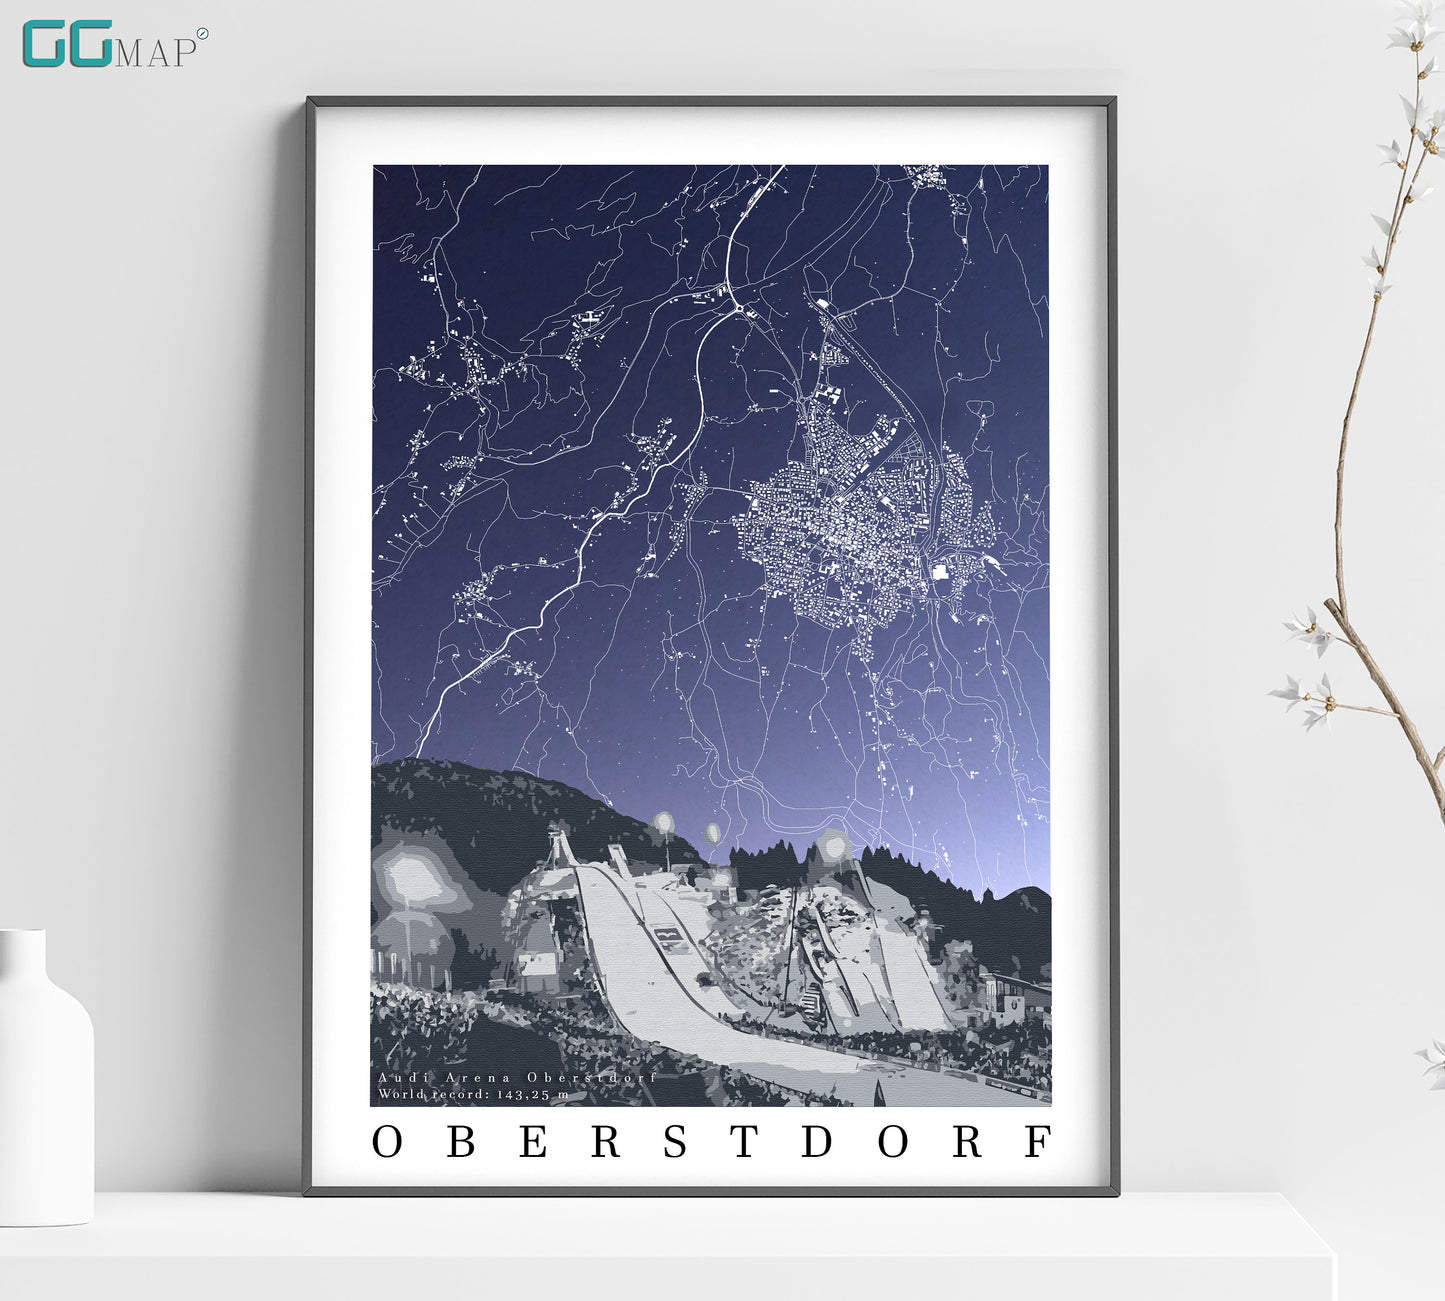 City map of OBERSTDORF - OBERSTDORF ski jumping - Home Decor OBERSTDORF - Wall decor - Oberstdorf gift - Audi Arena Oberstdorf - Print map